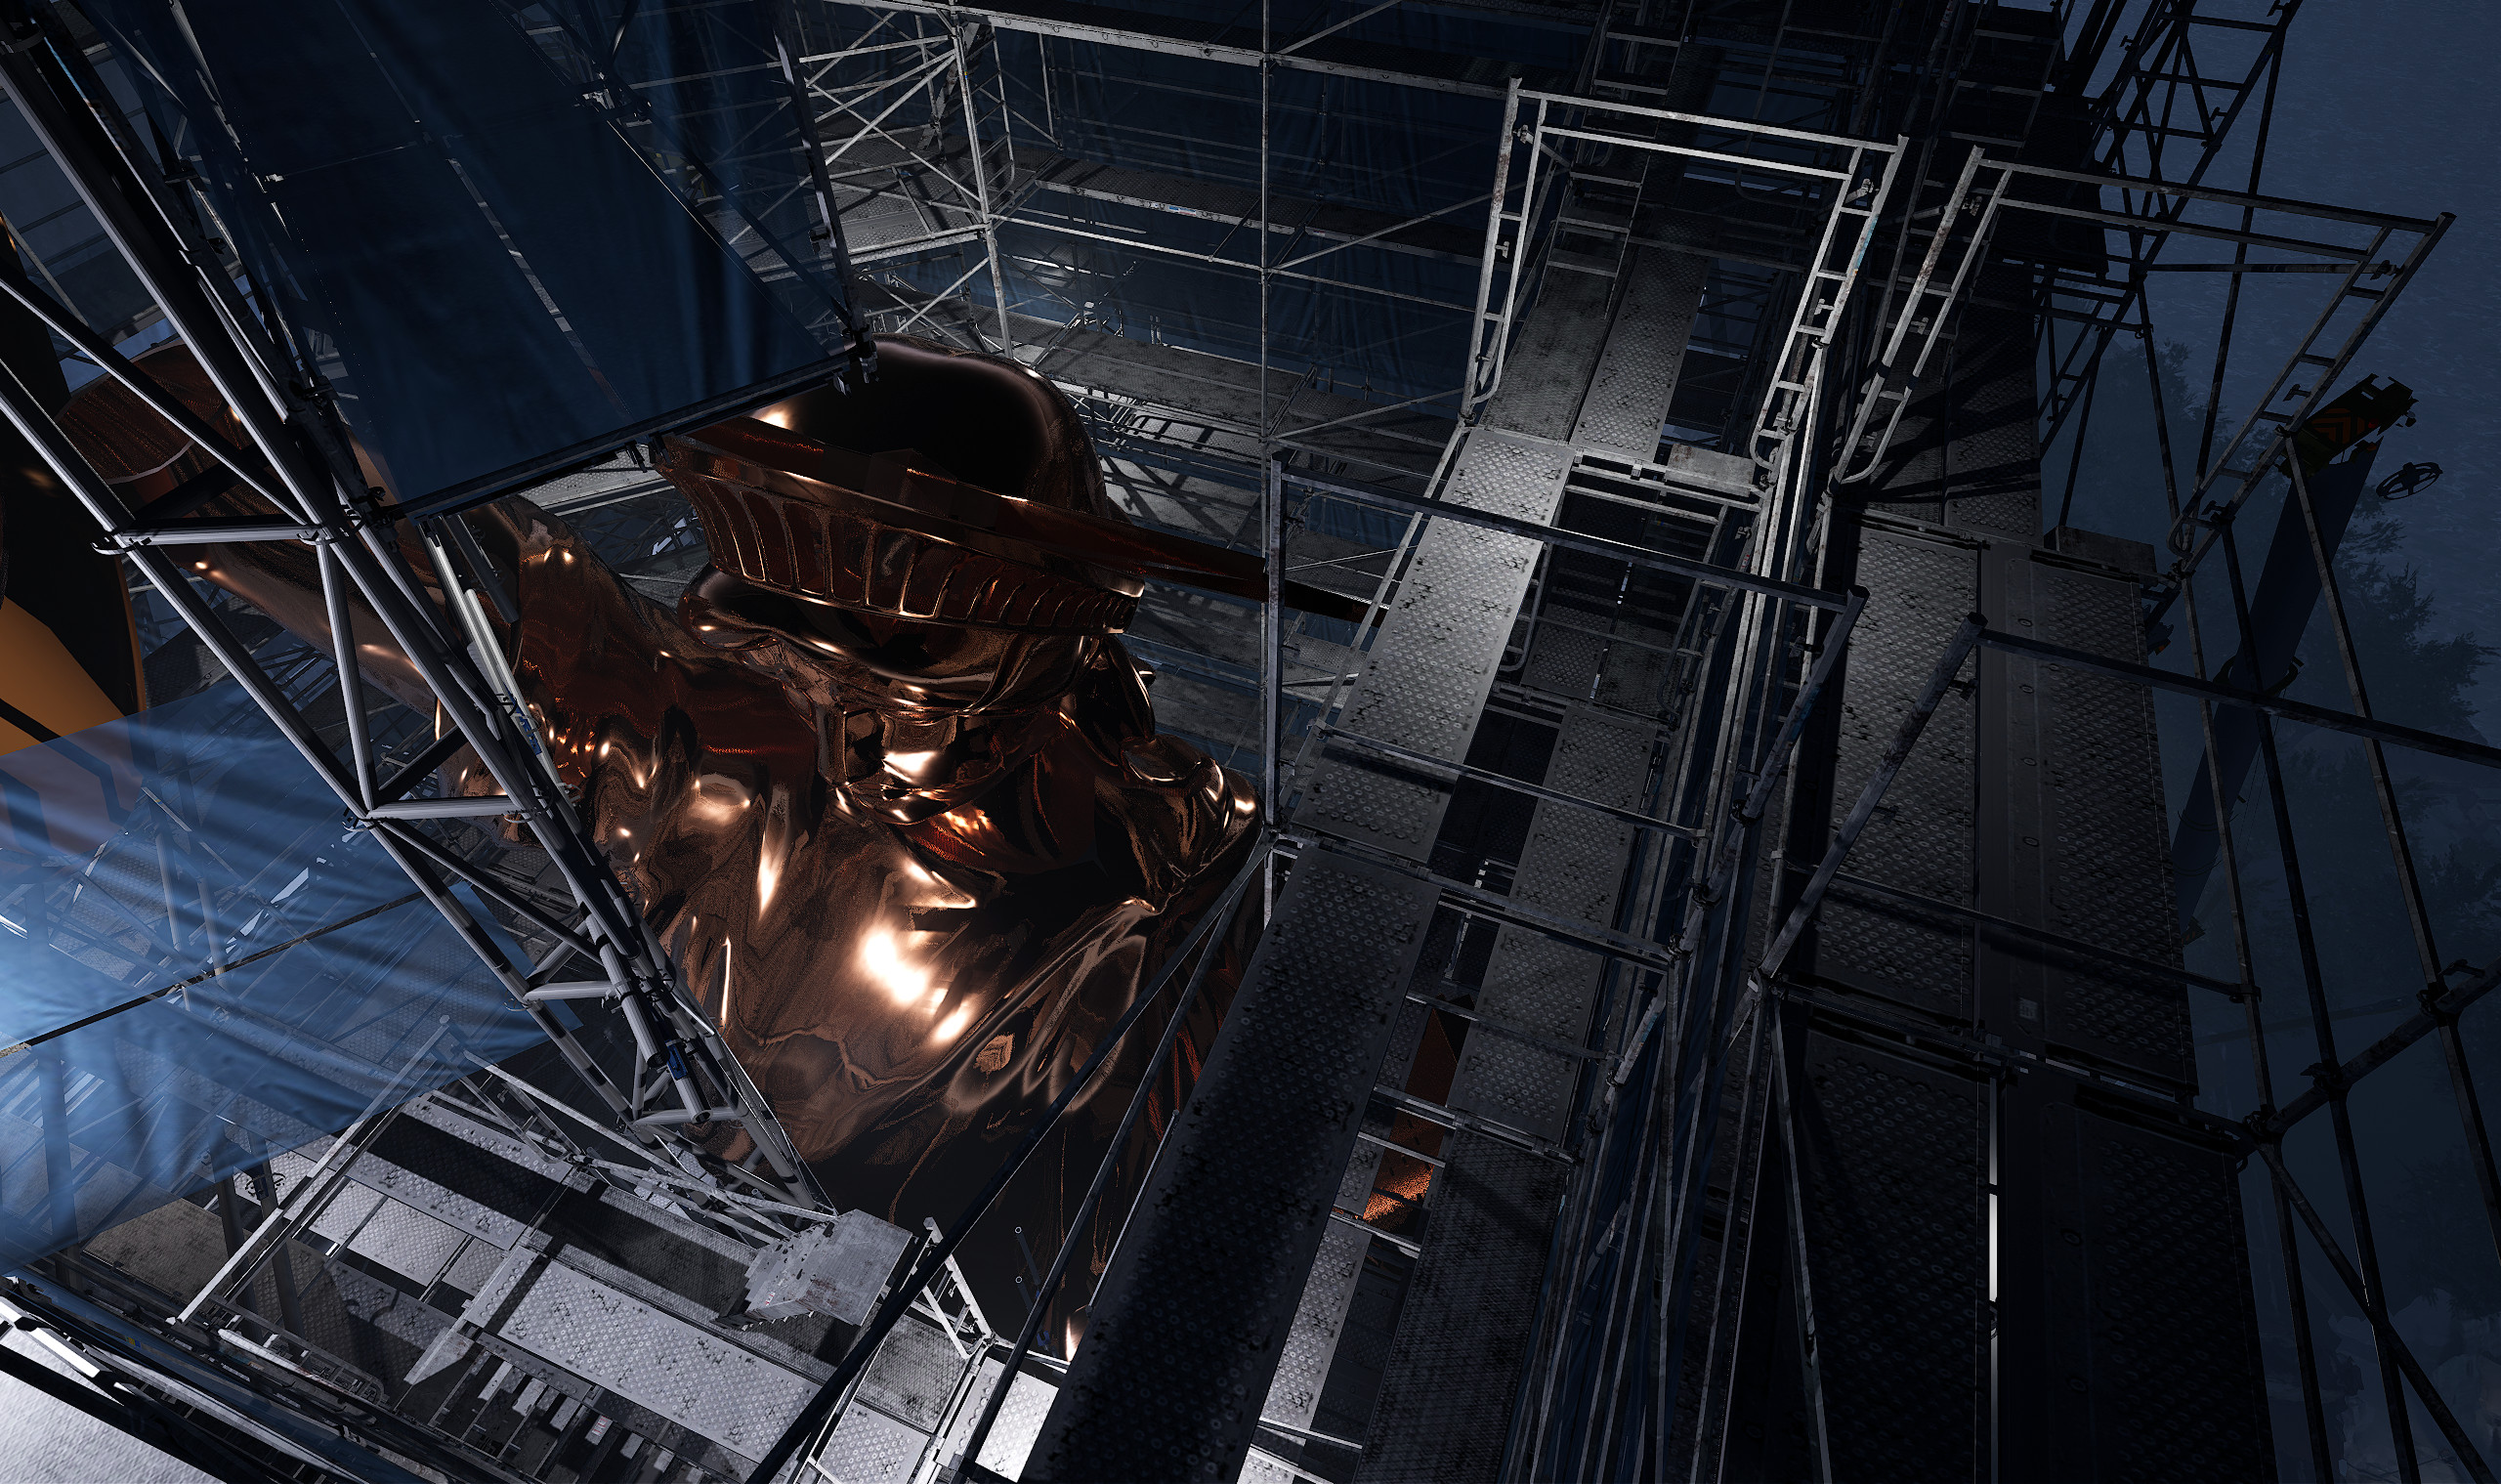 Unreal Engine Lighting Study of Ext_Statue of Liberty Shield Battle design by Marek Okon